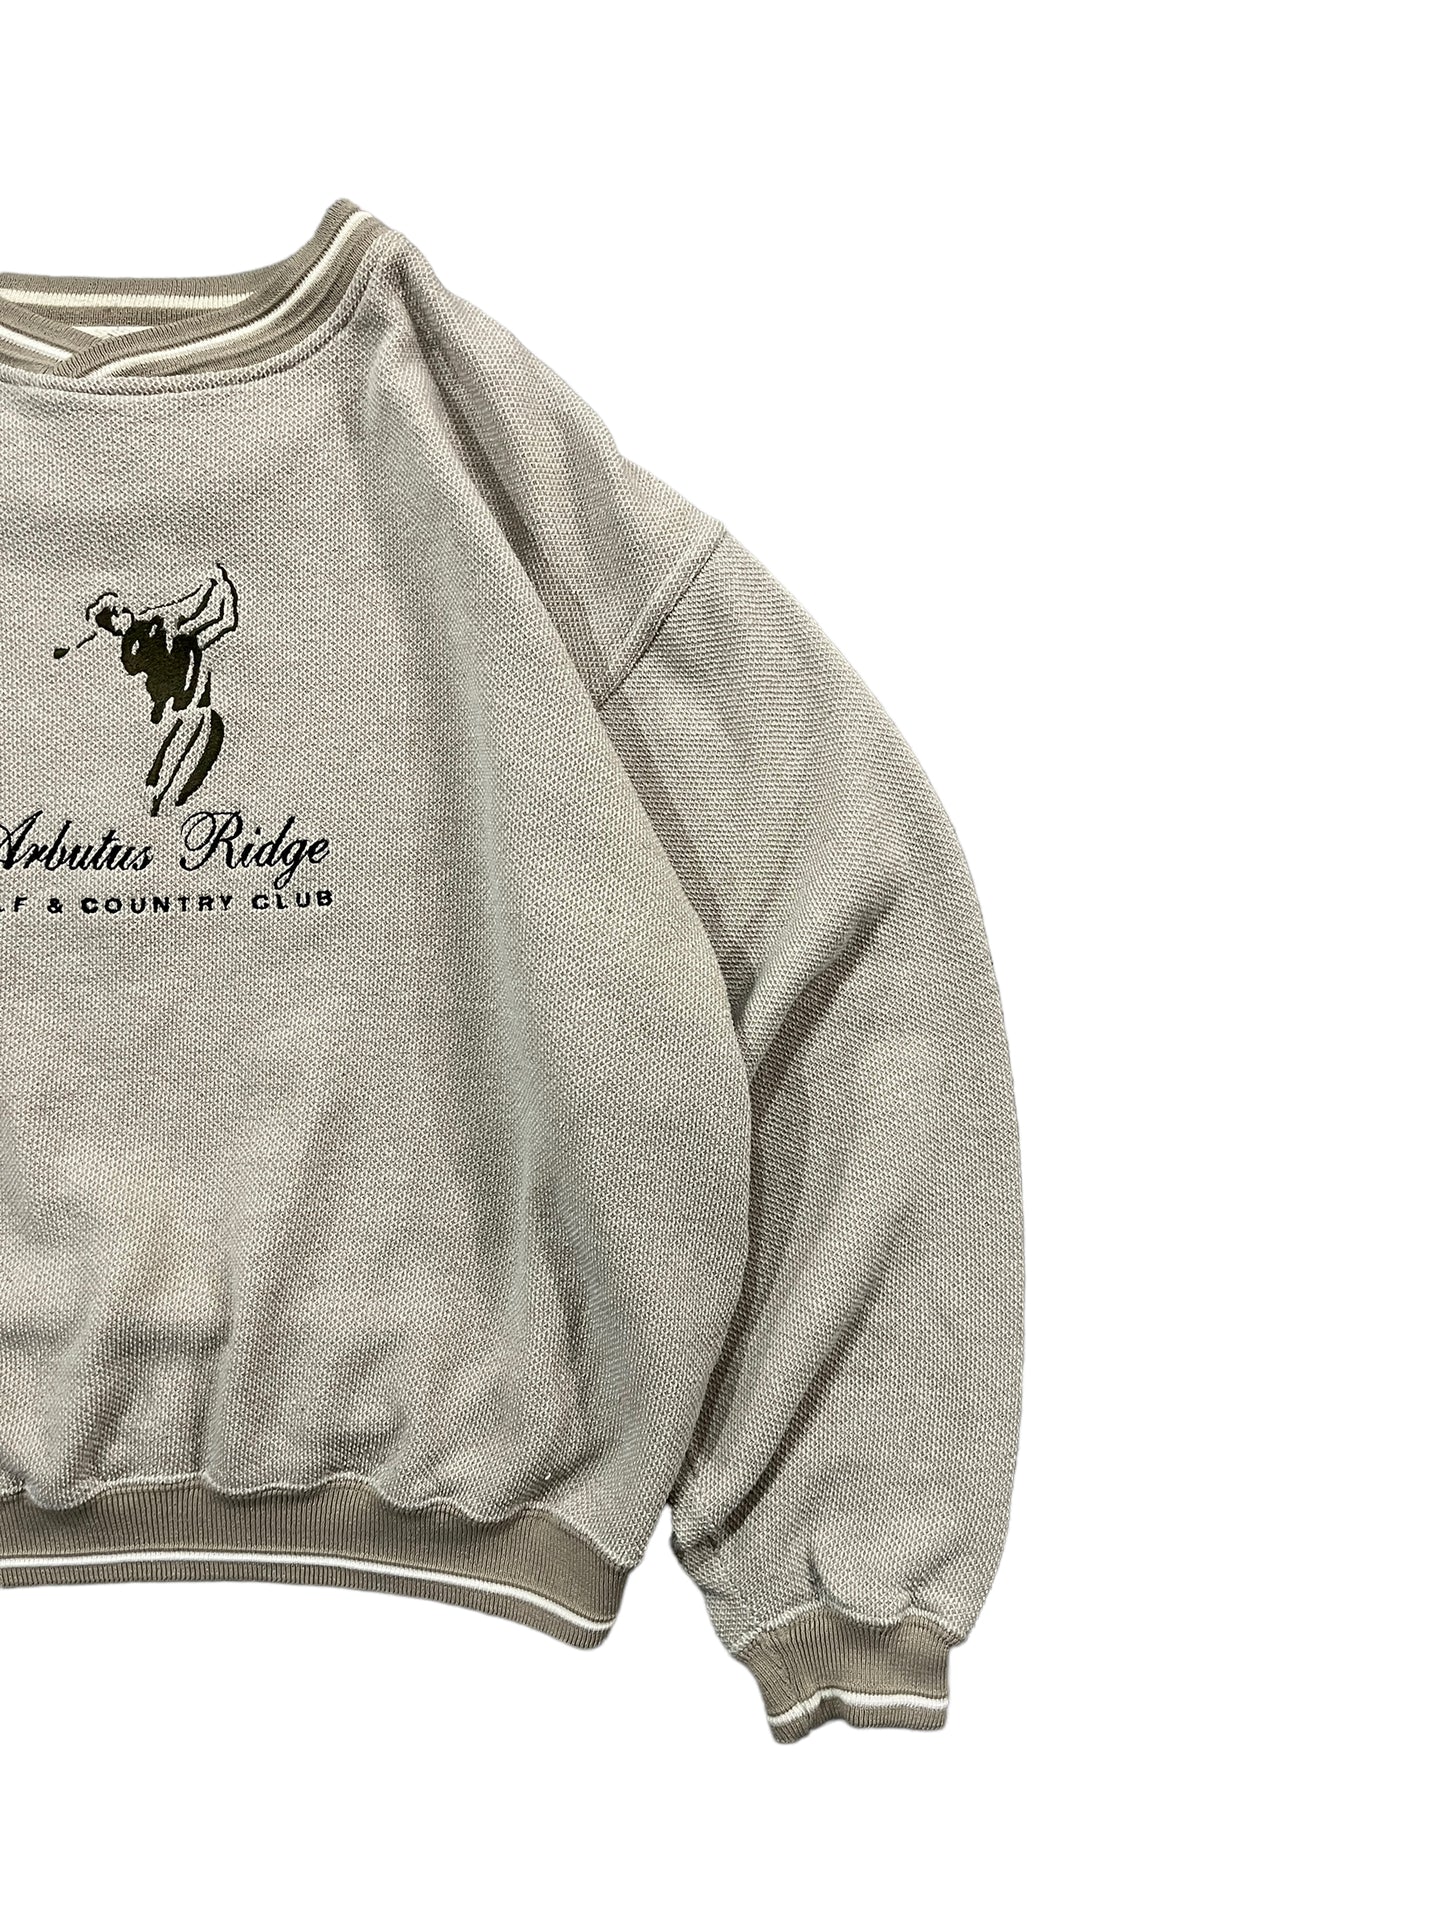 Vintage "Arbutus Ridge" Golf Club Sweater